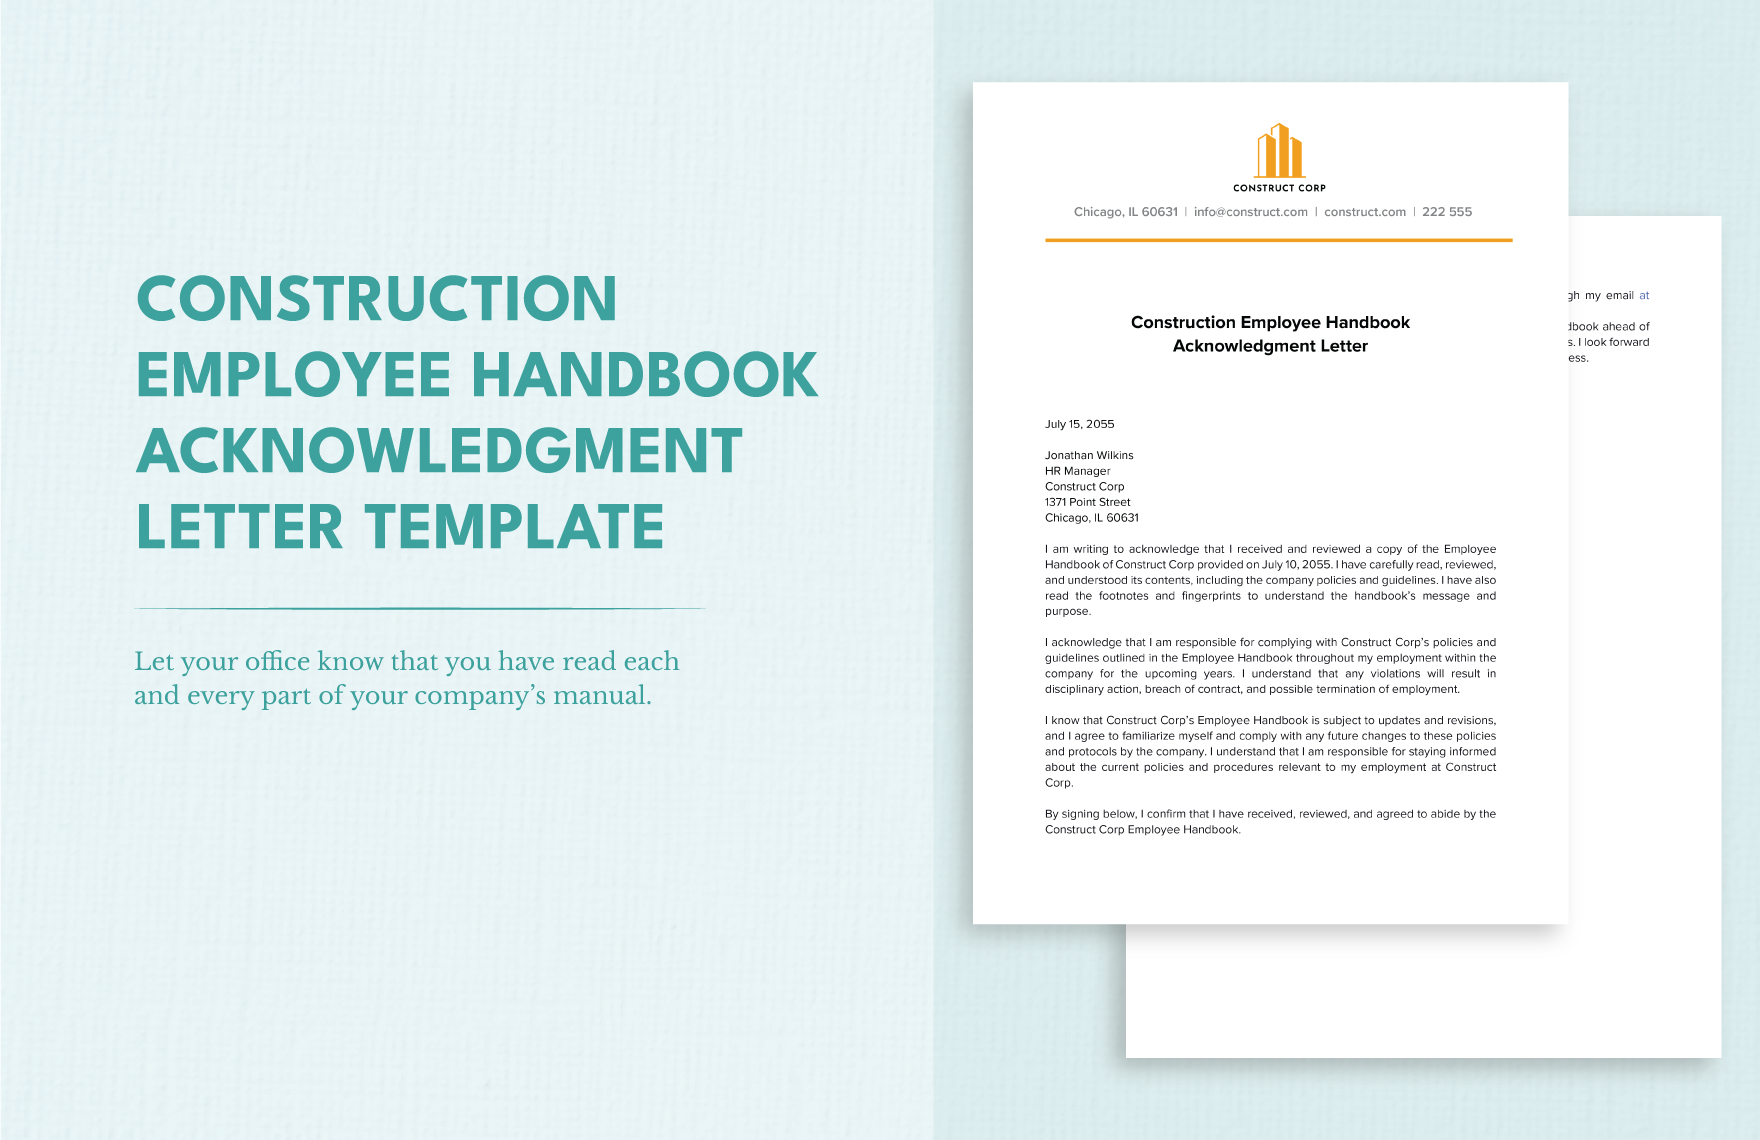 Construction Employee Handbook Acknowledgment Letter Template